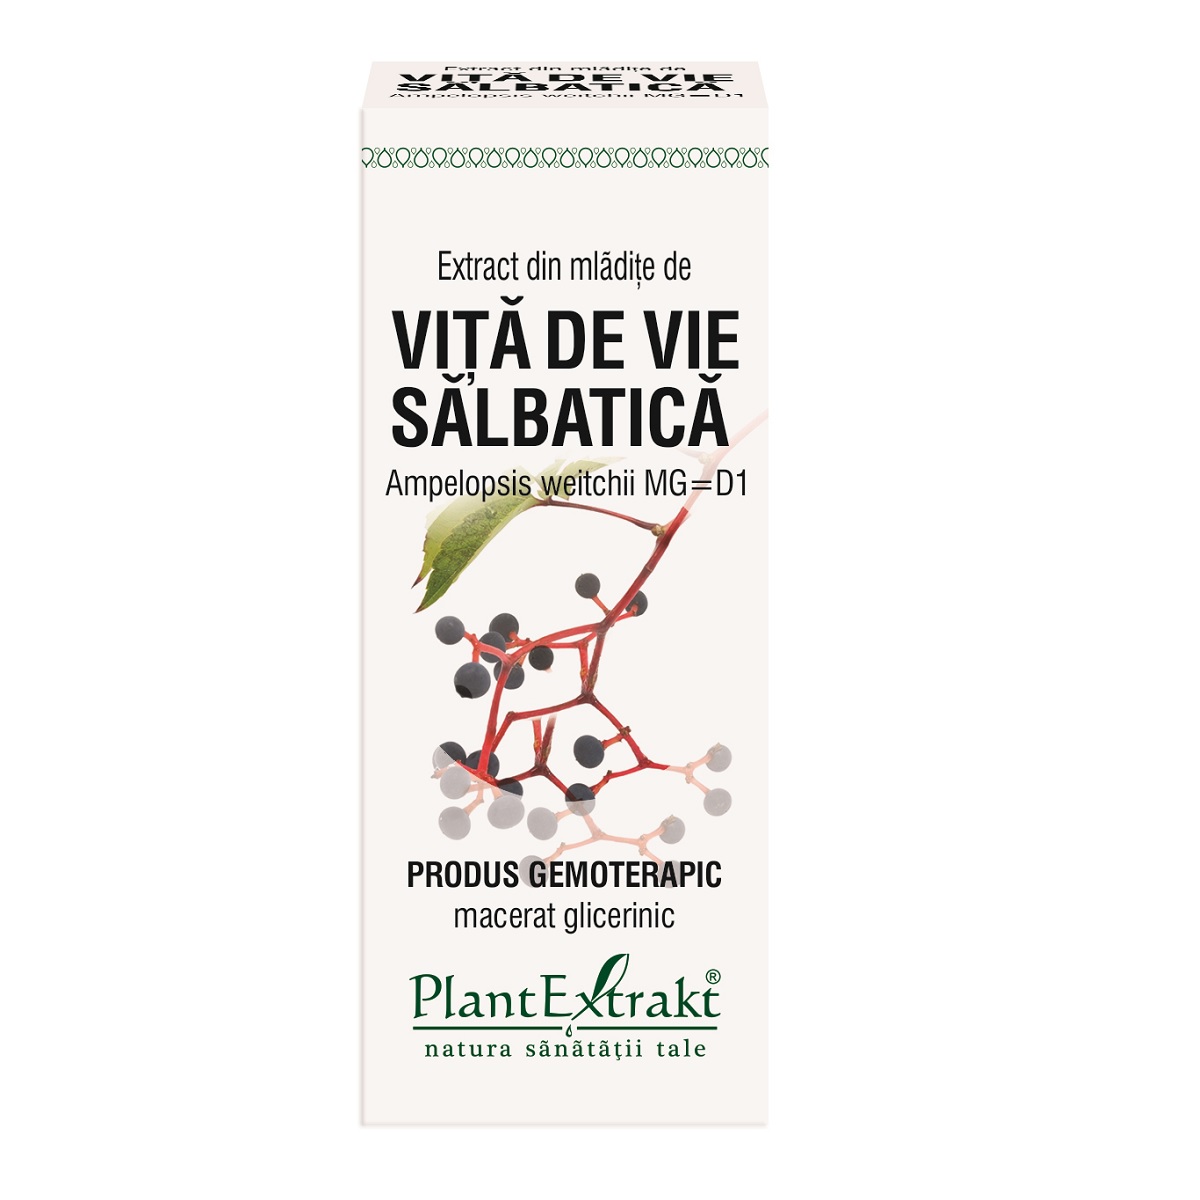 Extracte gemoderivate - Extract din mladite de Vita de vie salbatica x 50ml, medik-on.ro